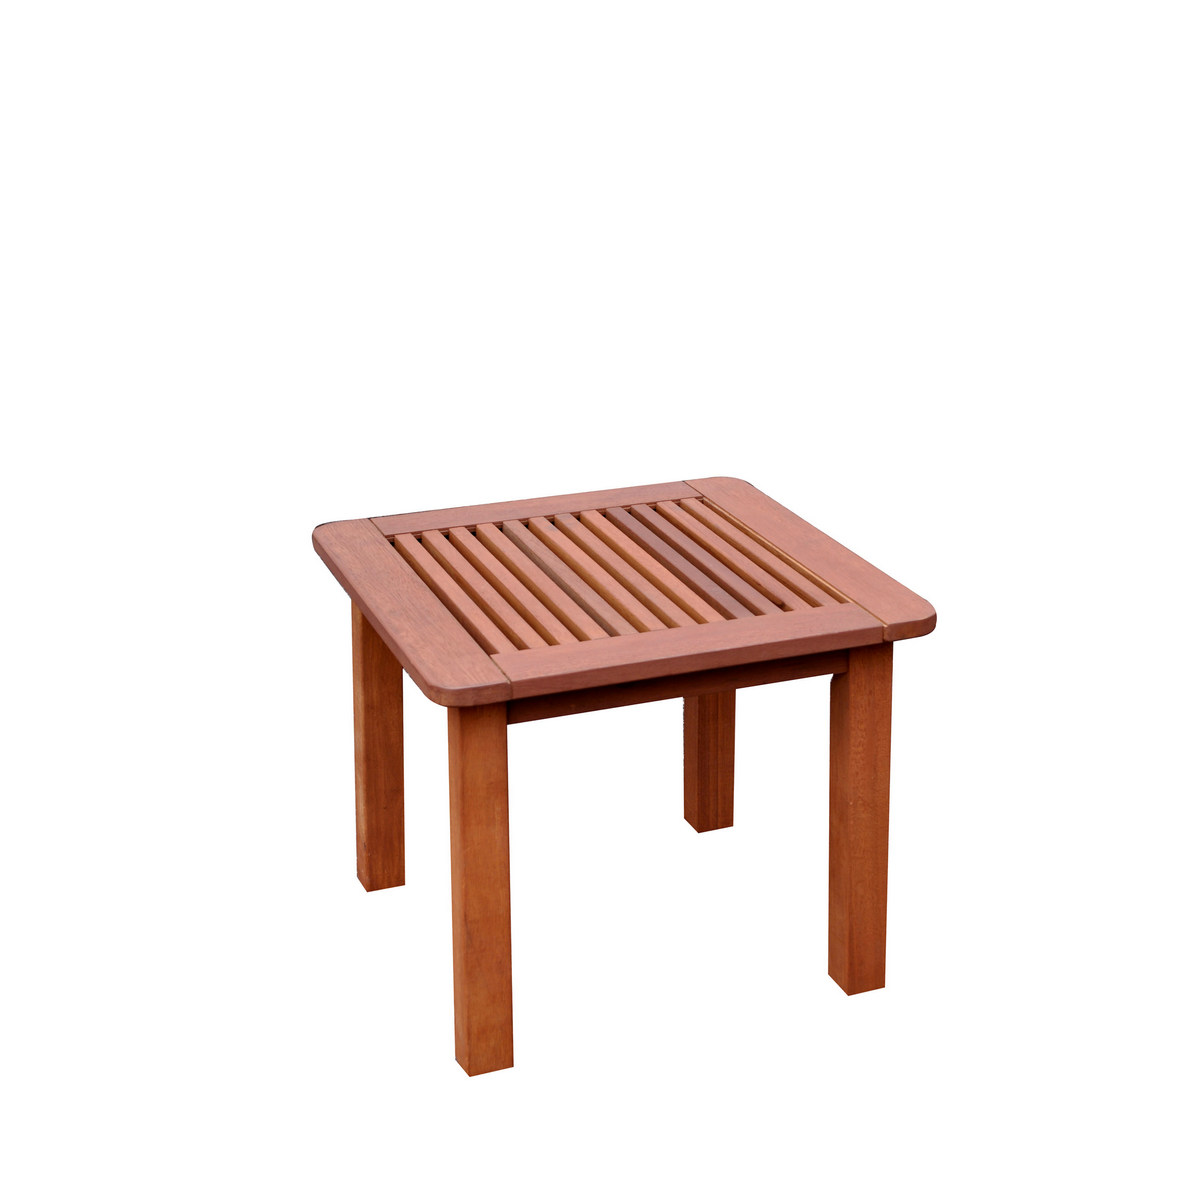 Corliving Pex-864-t Miramar Cinnamon Brown Hardwood Outdoor Side Table